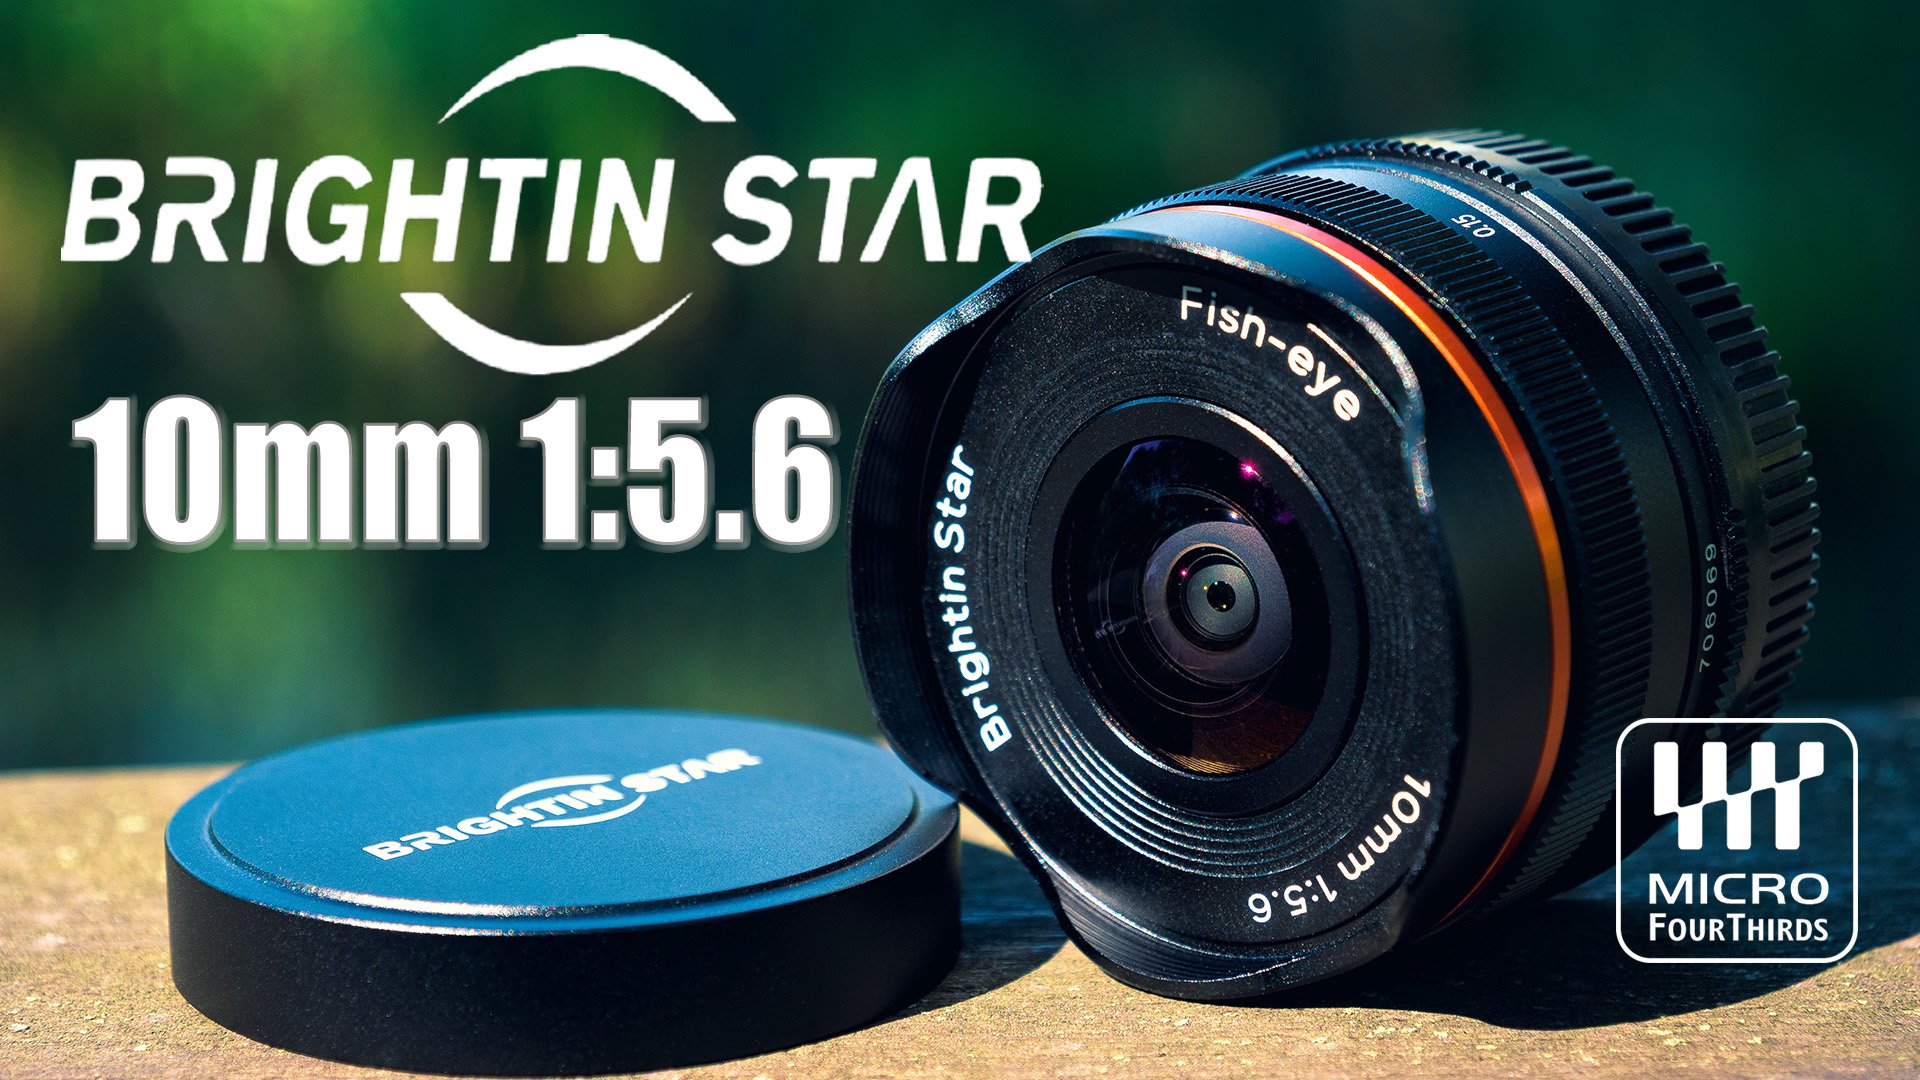 BRIGHTIN STAR 10mm f5.6 | Обзор бюджетного ФИШАЙ-объектива | E, EOSM, FX, MFT